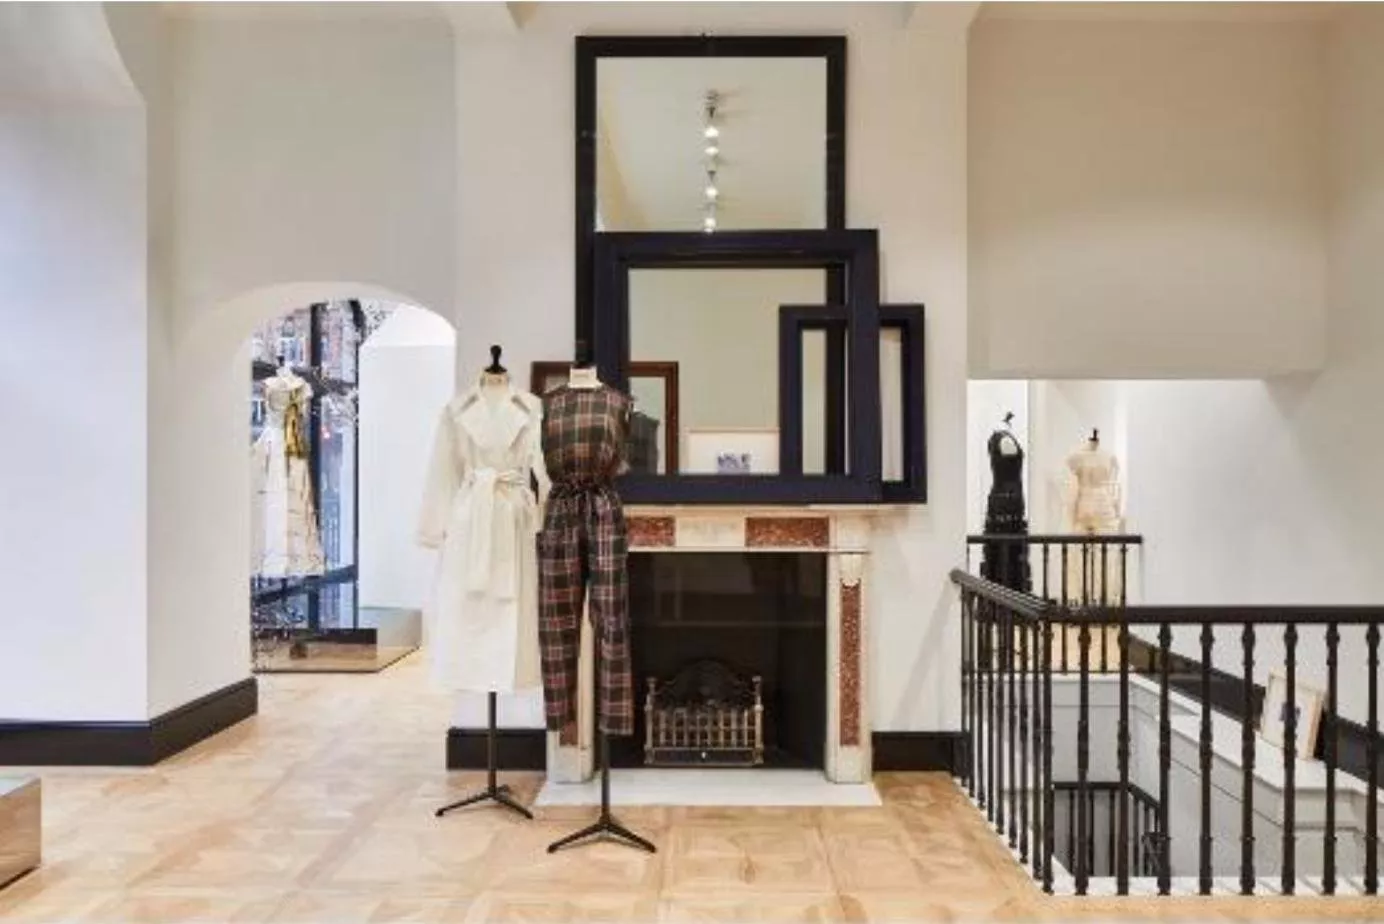 Maison Rabih Keyrouz تعلن افتتاح أول متجر لها في لندن